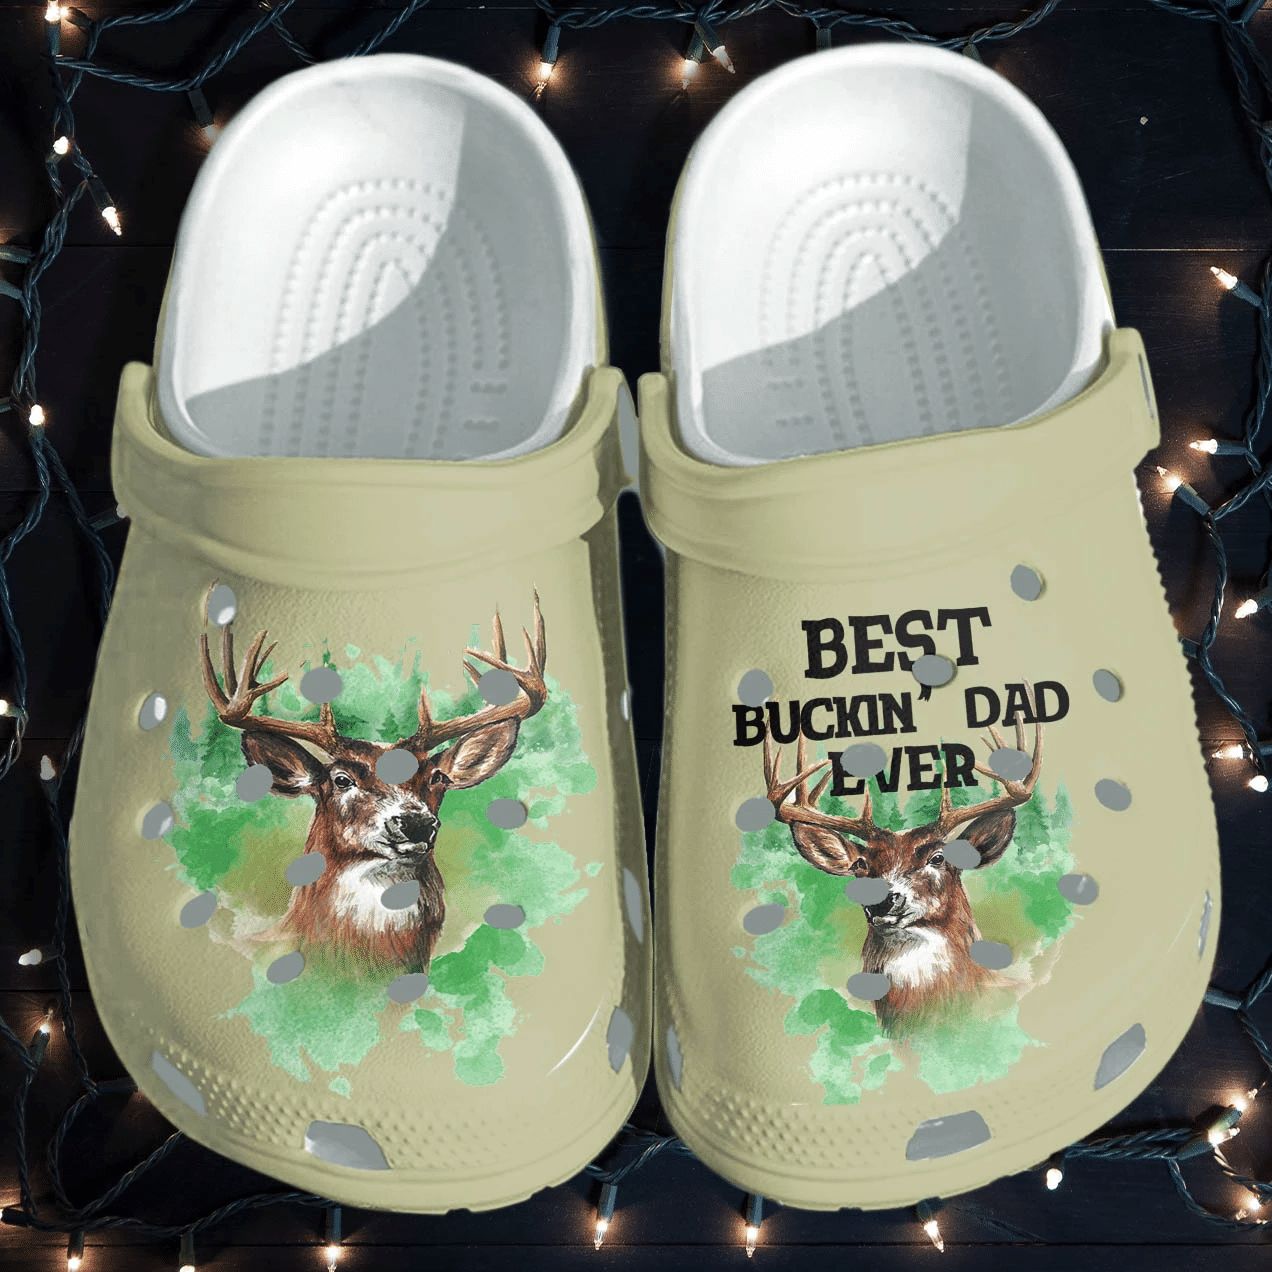 Best Buckin Dad Ever Deer Hunting Shoes Crocs Camping Deer Hunter Shoes